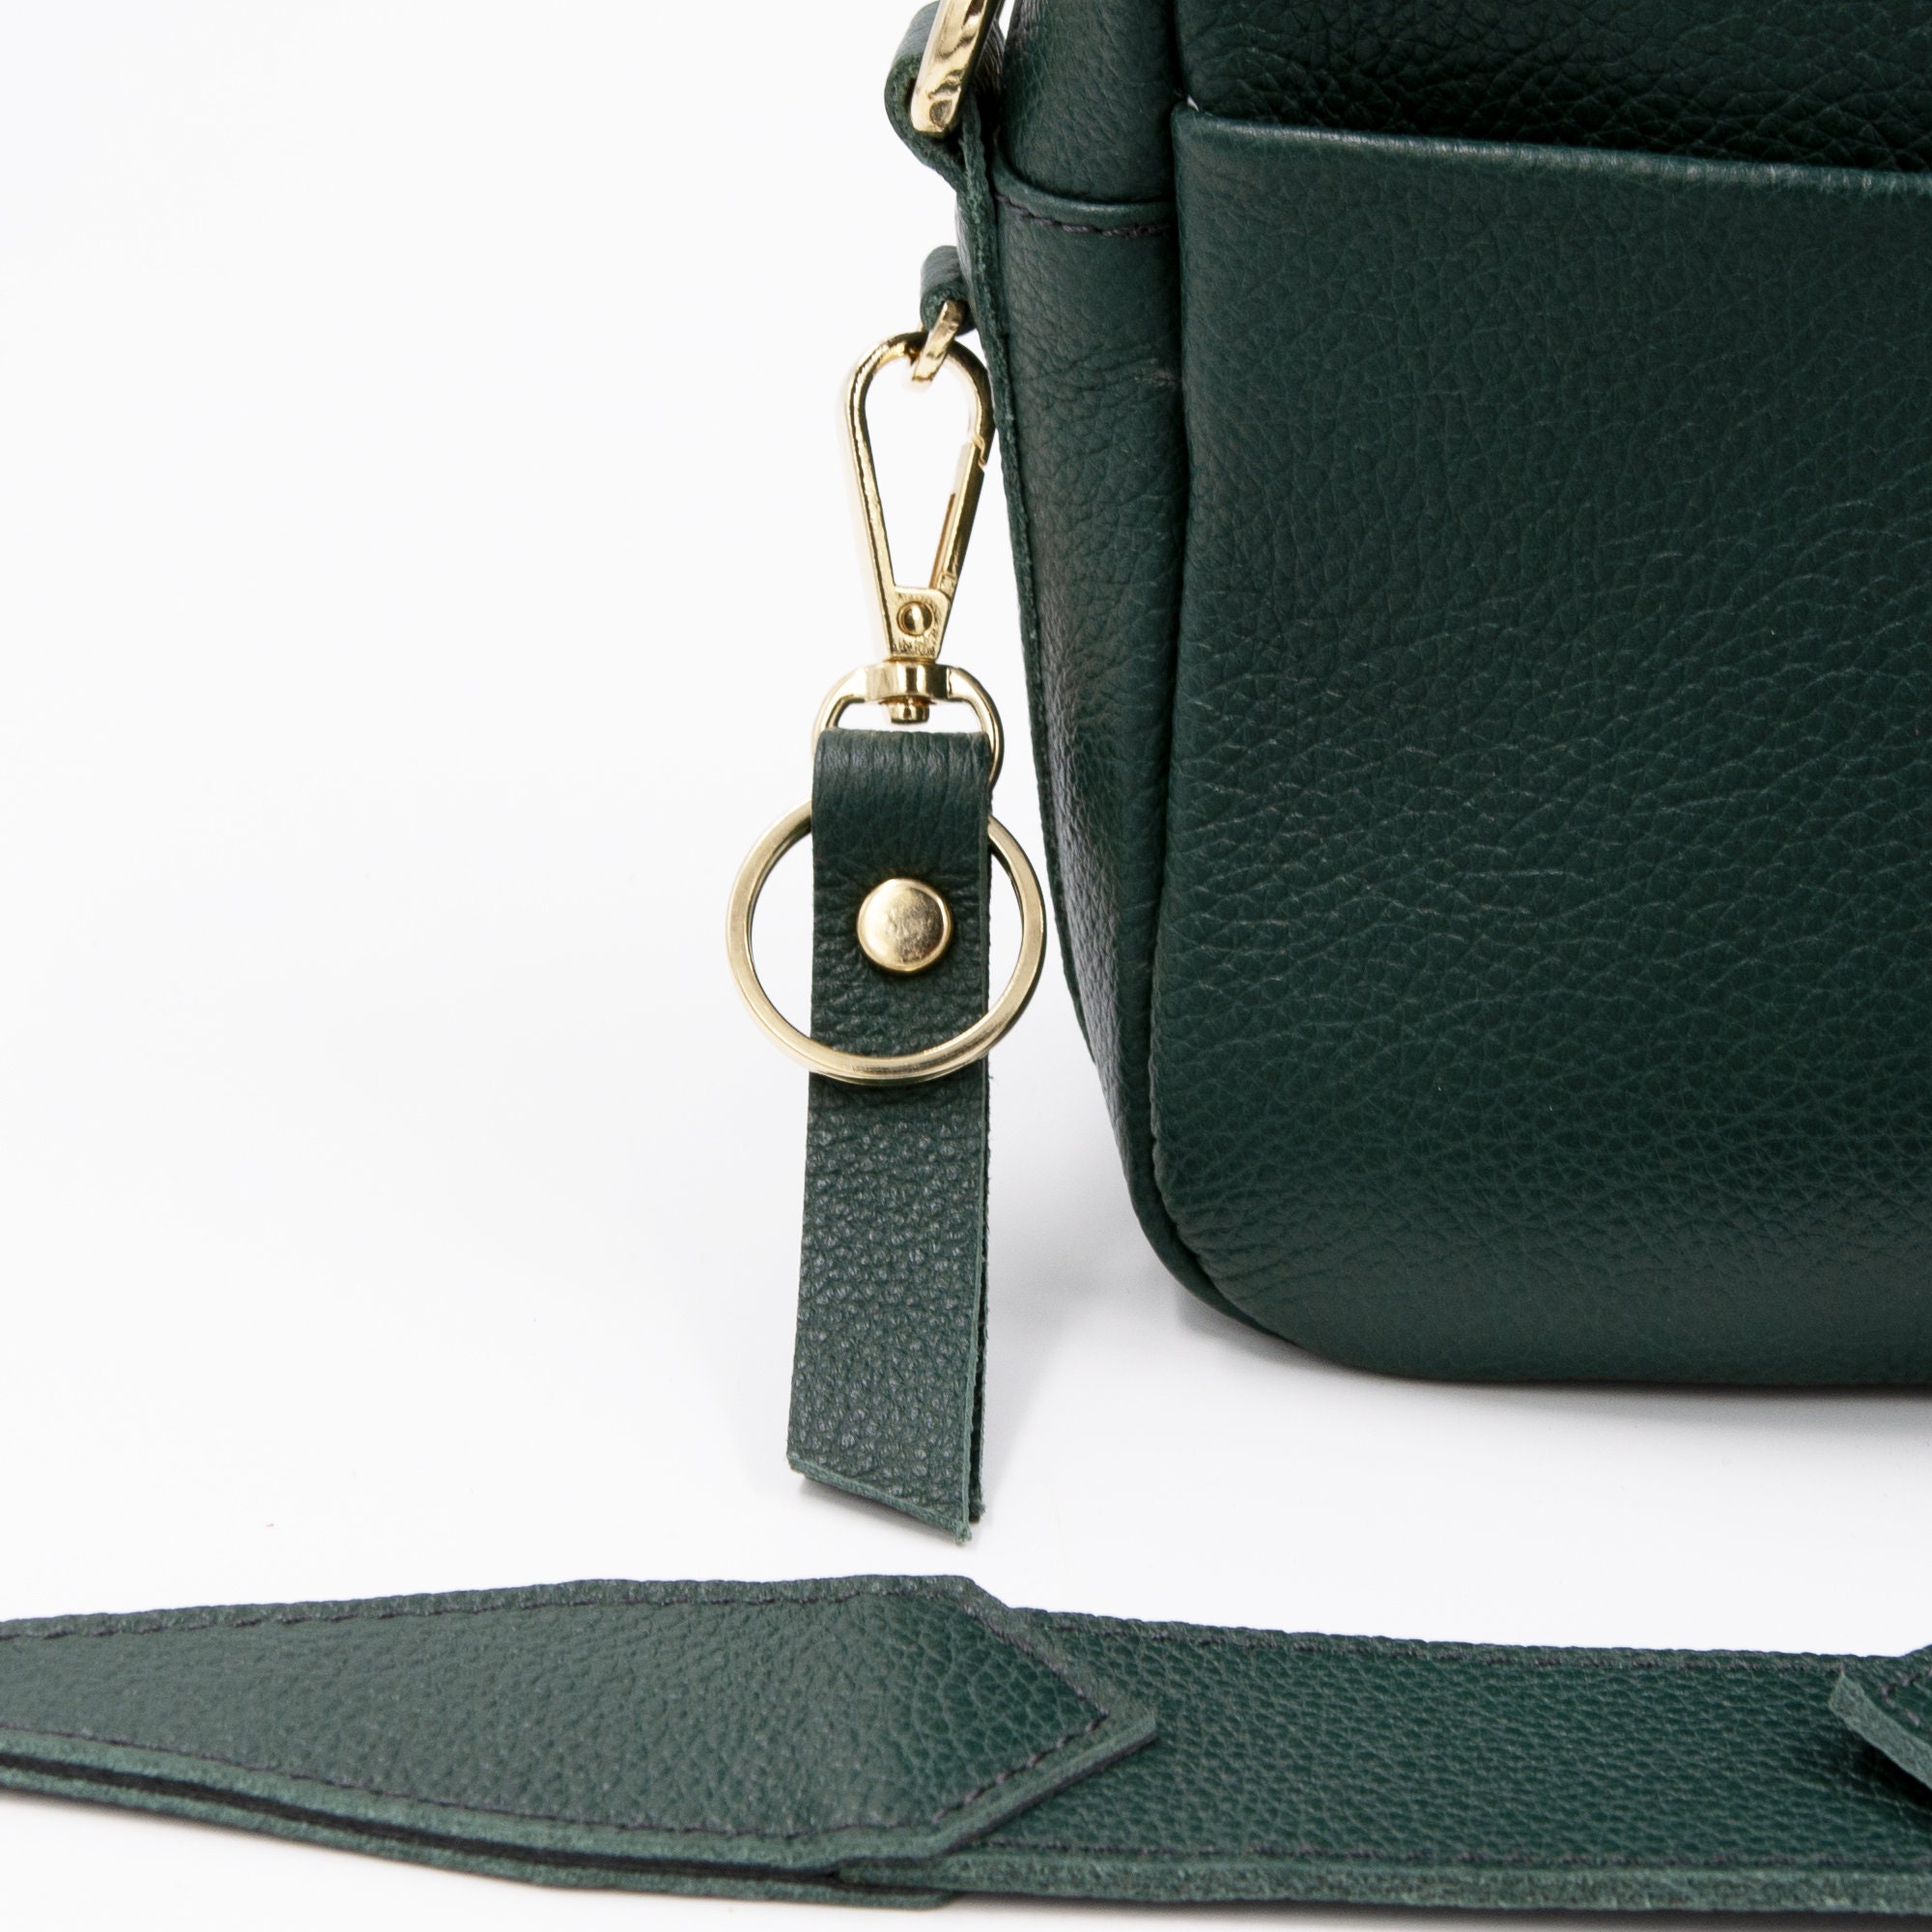 Yucurem Genuine Leather Women Crossbody Bag Casual Small Camera